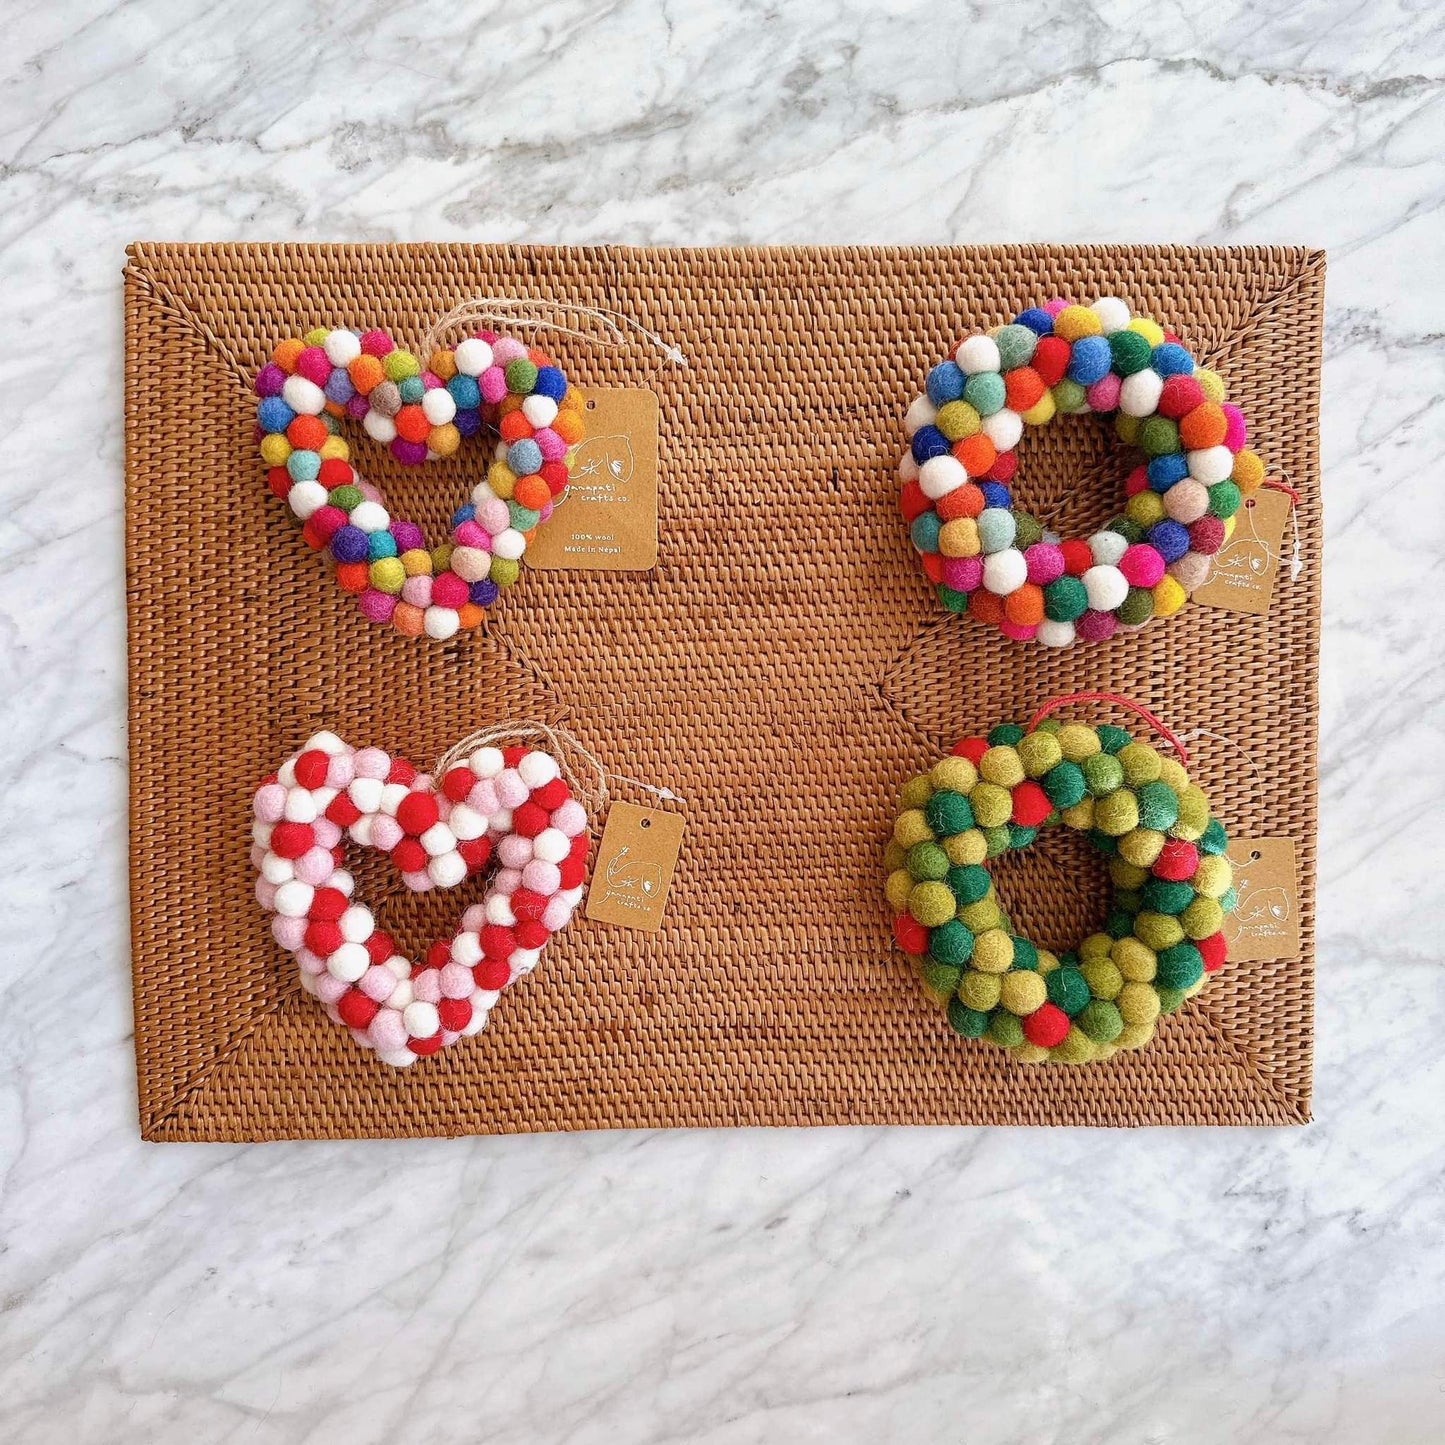 Felt Ornament - Mini Pompom Heart Wreath